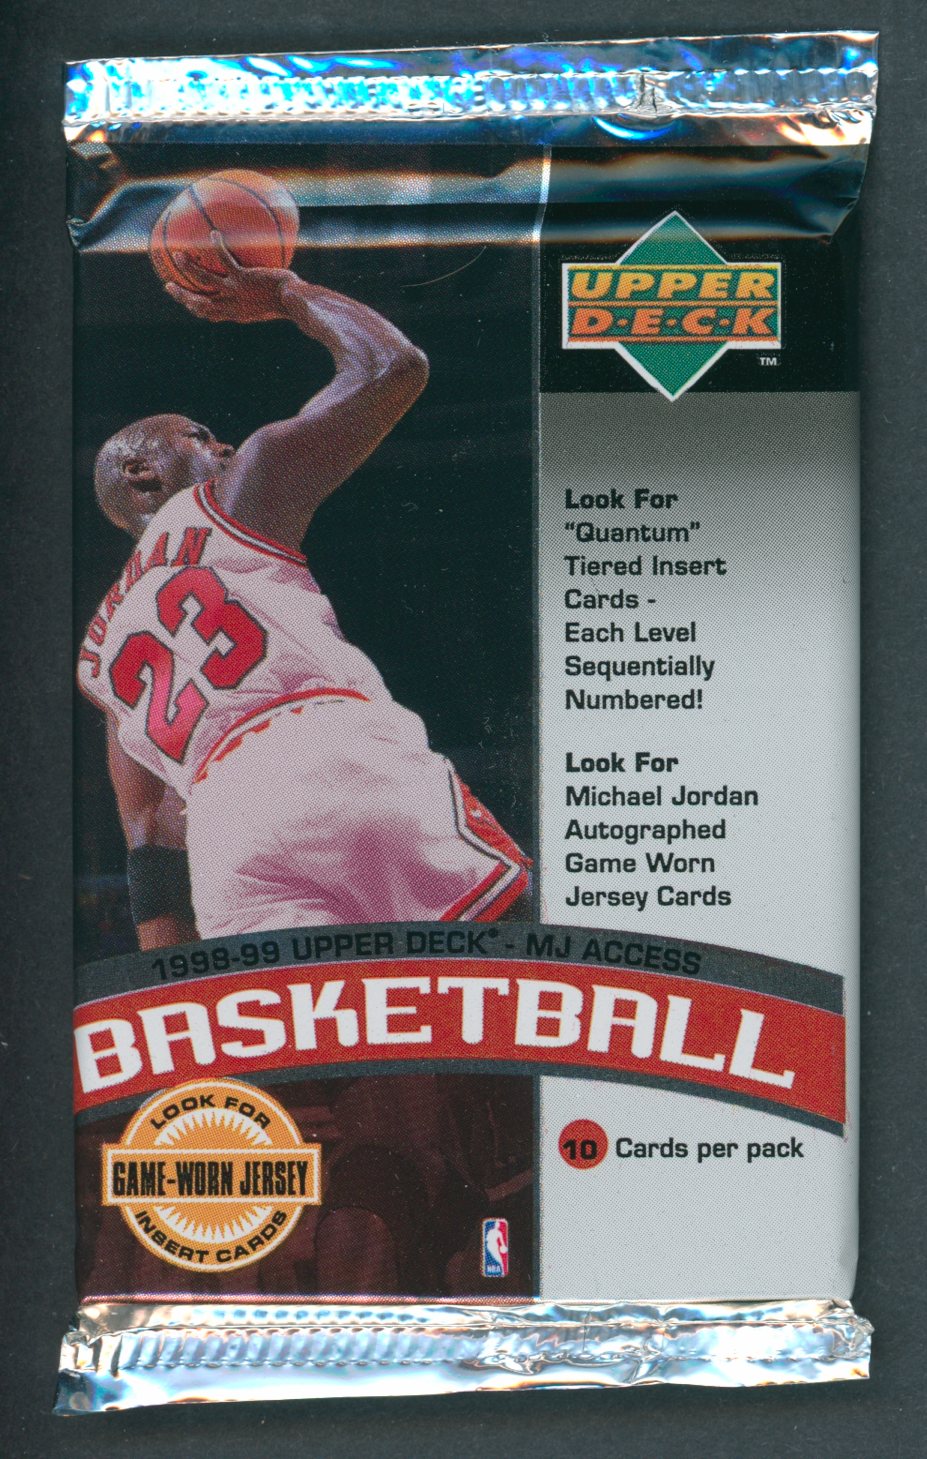 1998/99 Upper Deck Basketball MJ Access Unopened Series 2 Pack (Hobby)